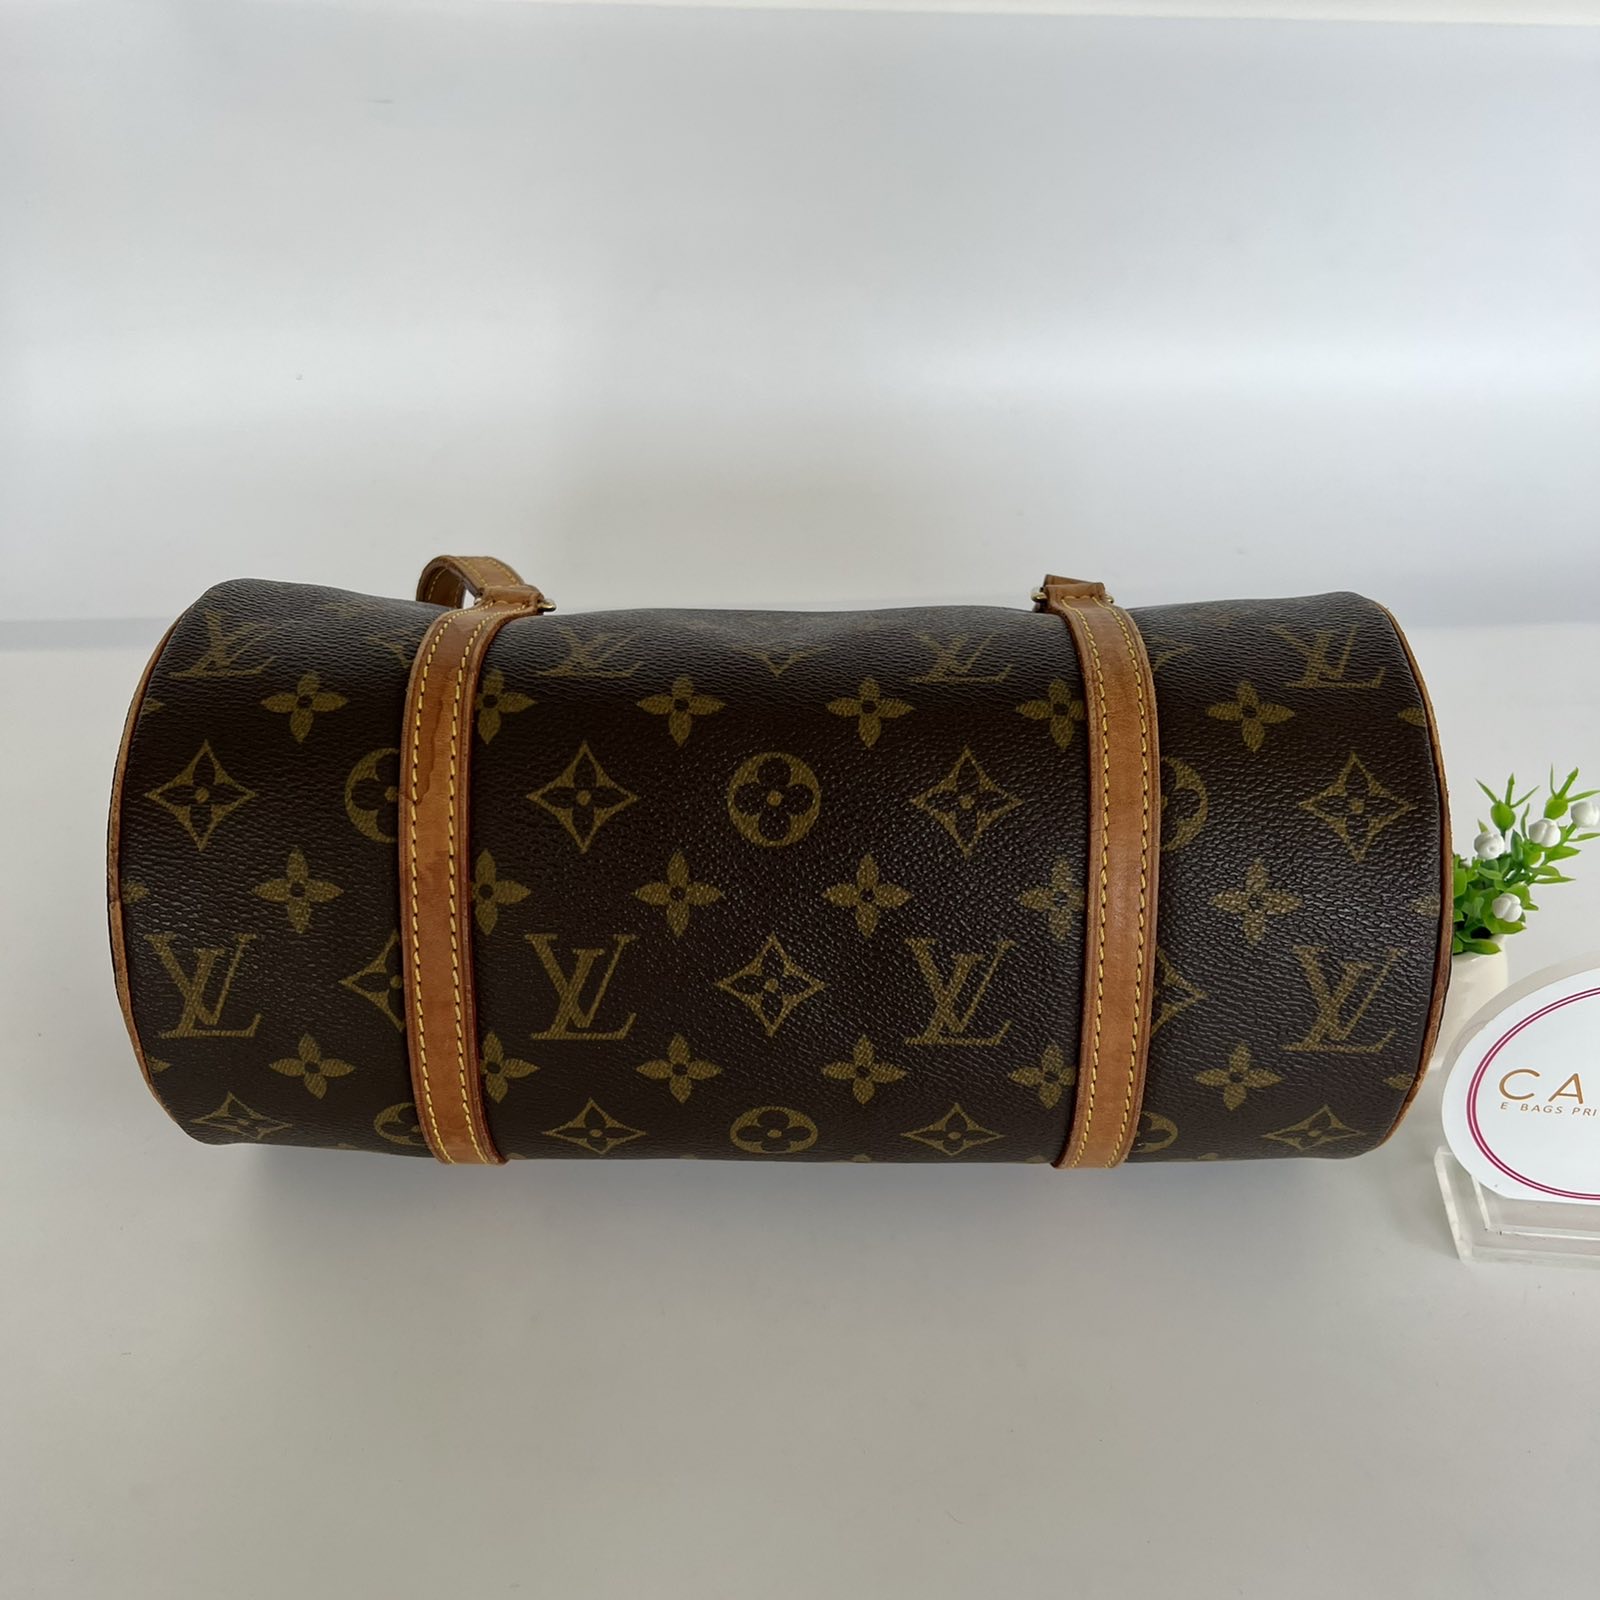 Louis Vuitton Monogram Papillon 26 Review⎮My 20 Year Old Bag +